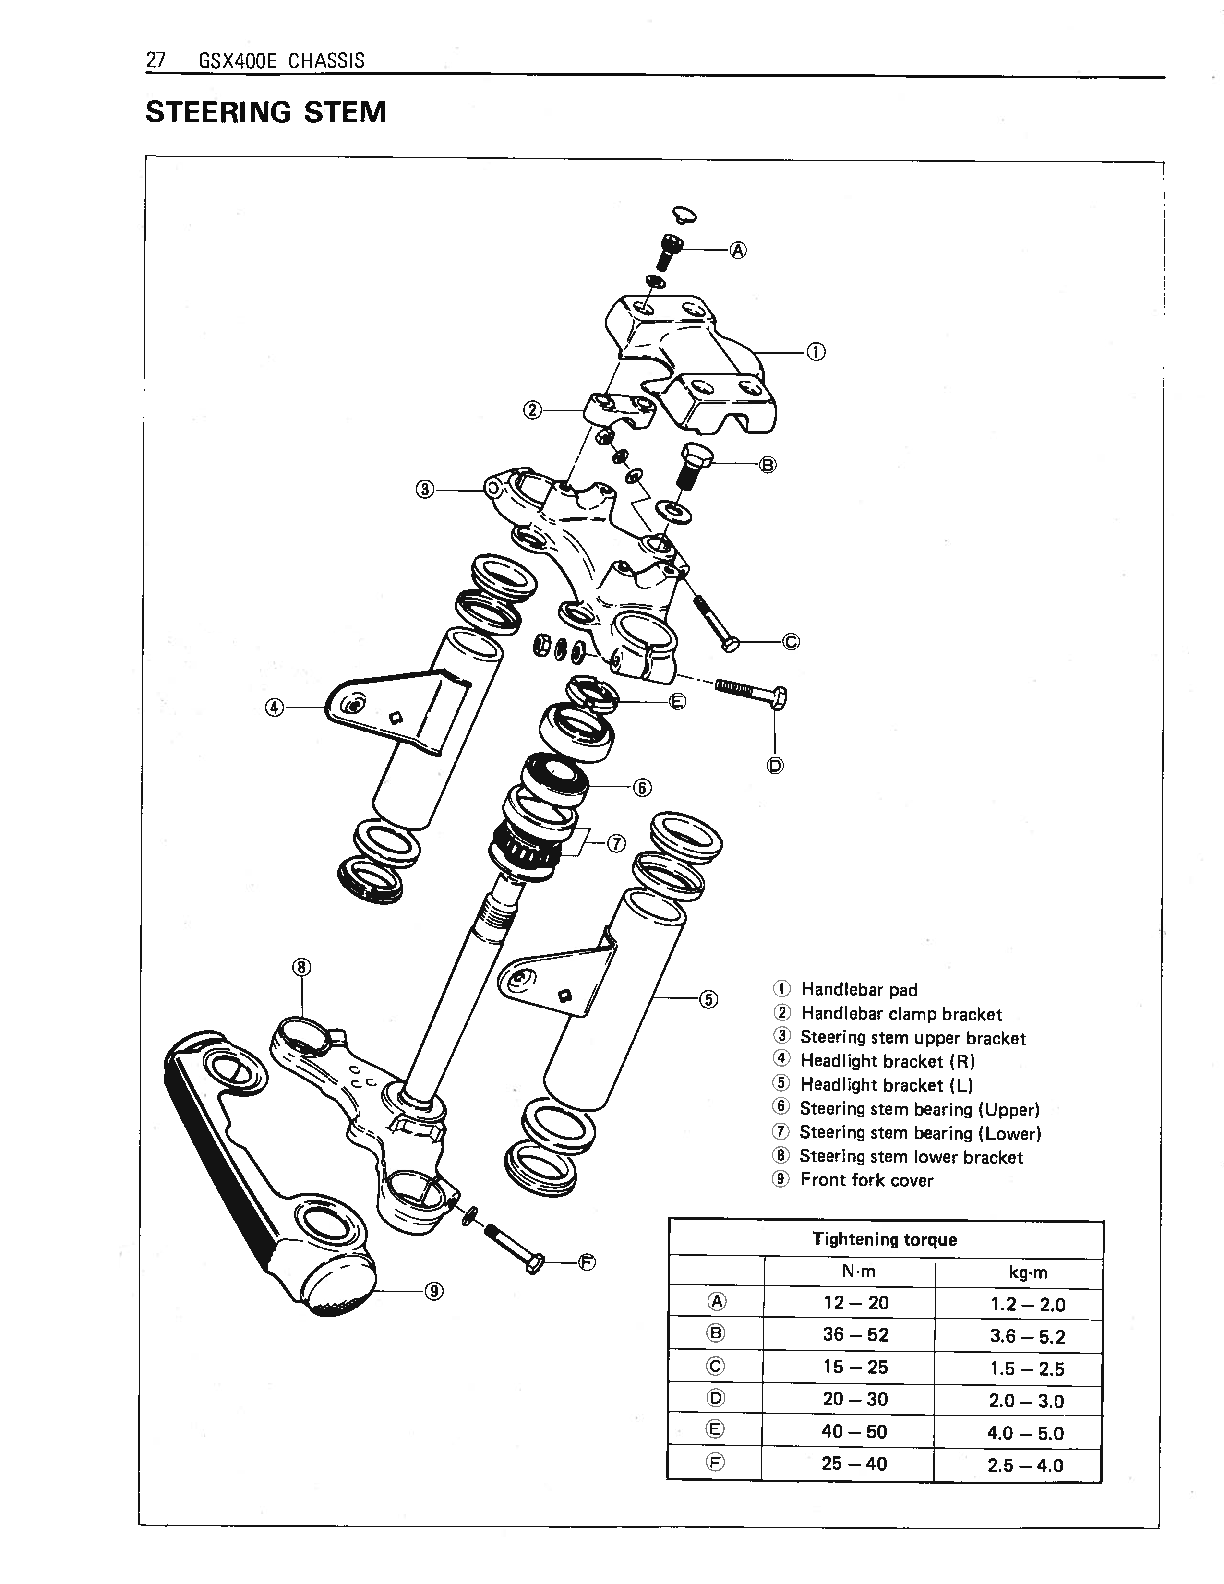 1980-1984 Suzuki GSX400T Twin Cylinder Service Manual